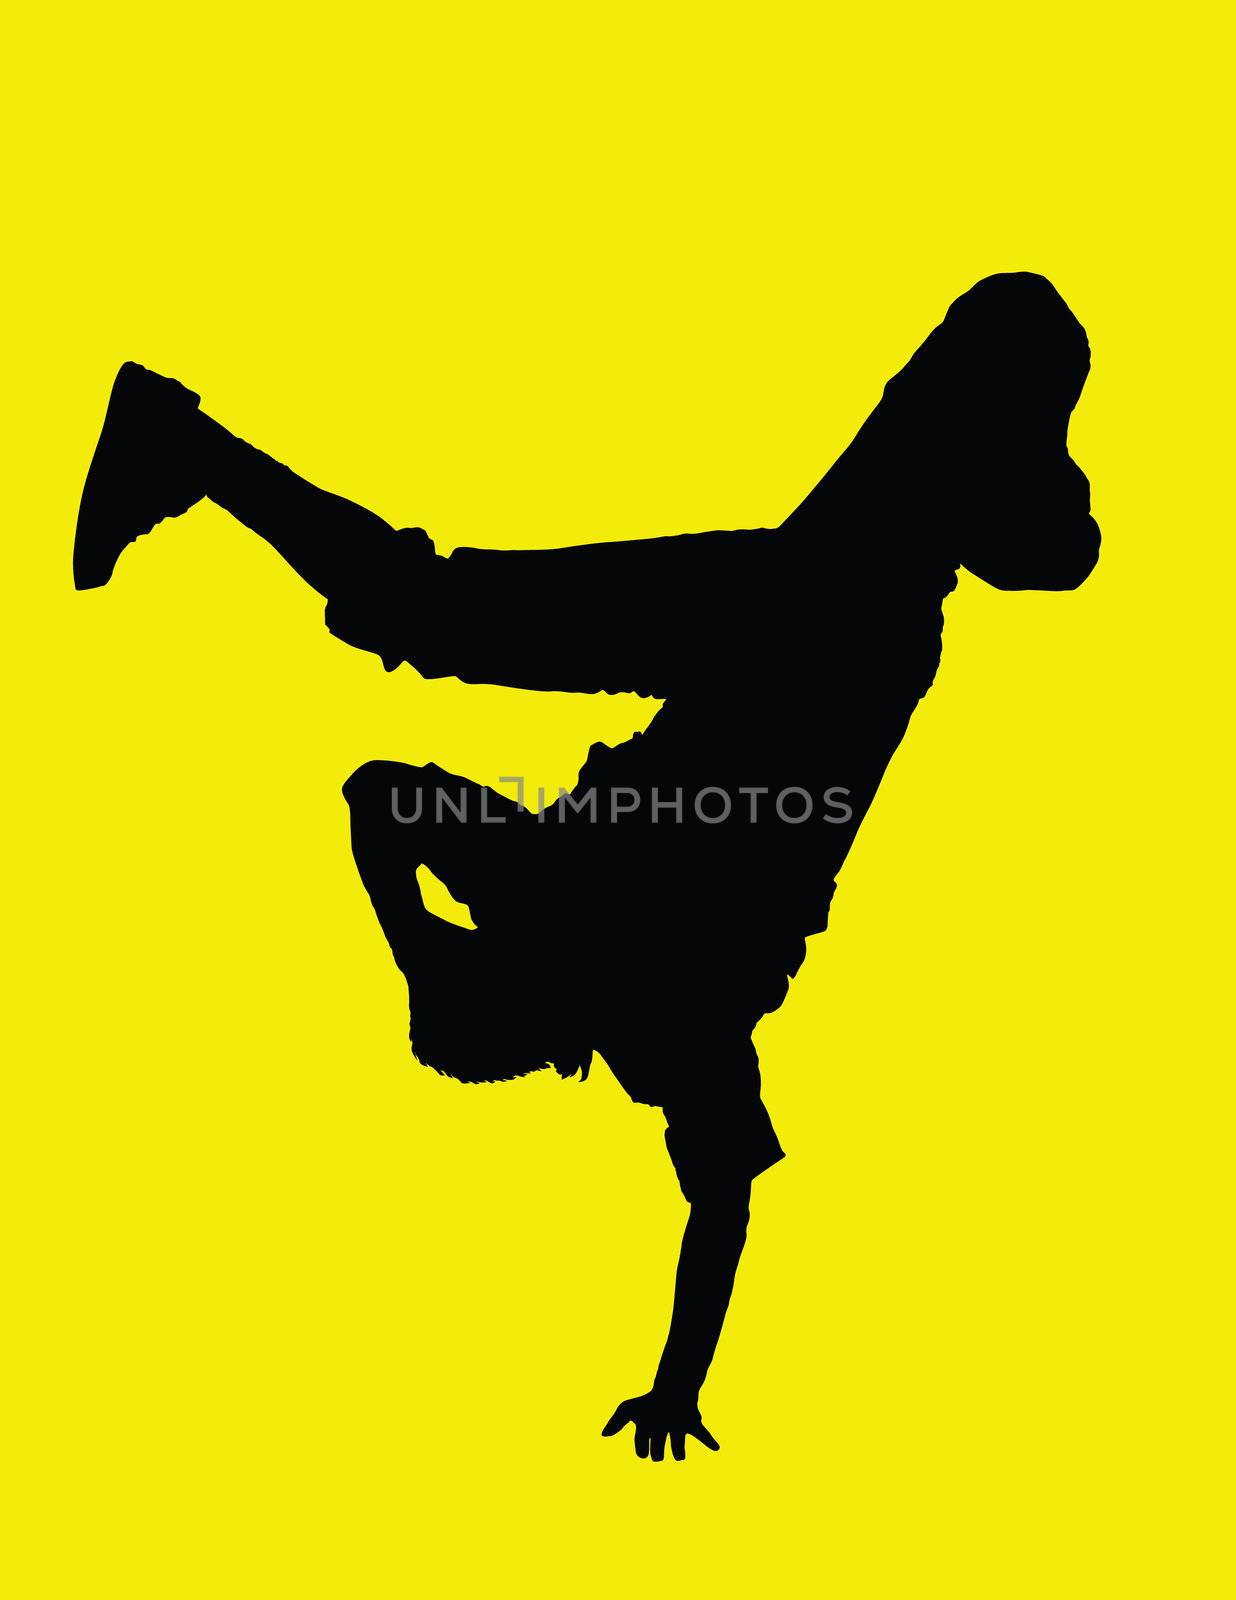 upside-down dancer by Kuzma